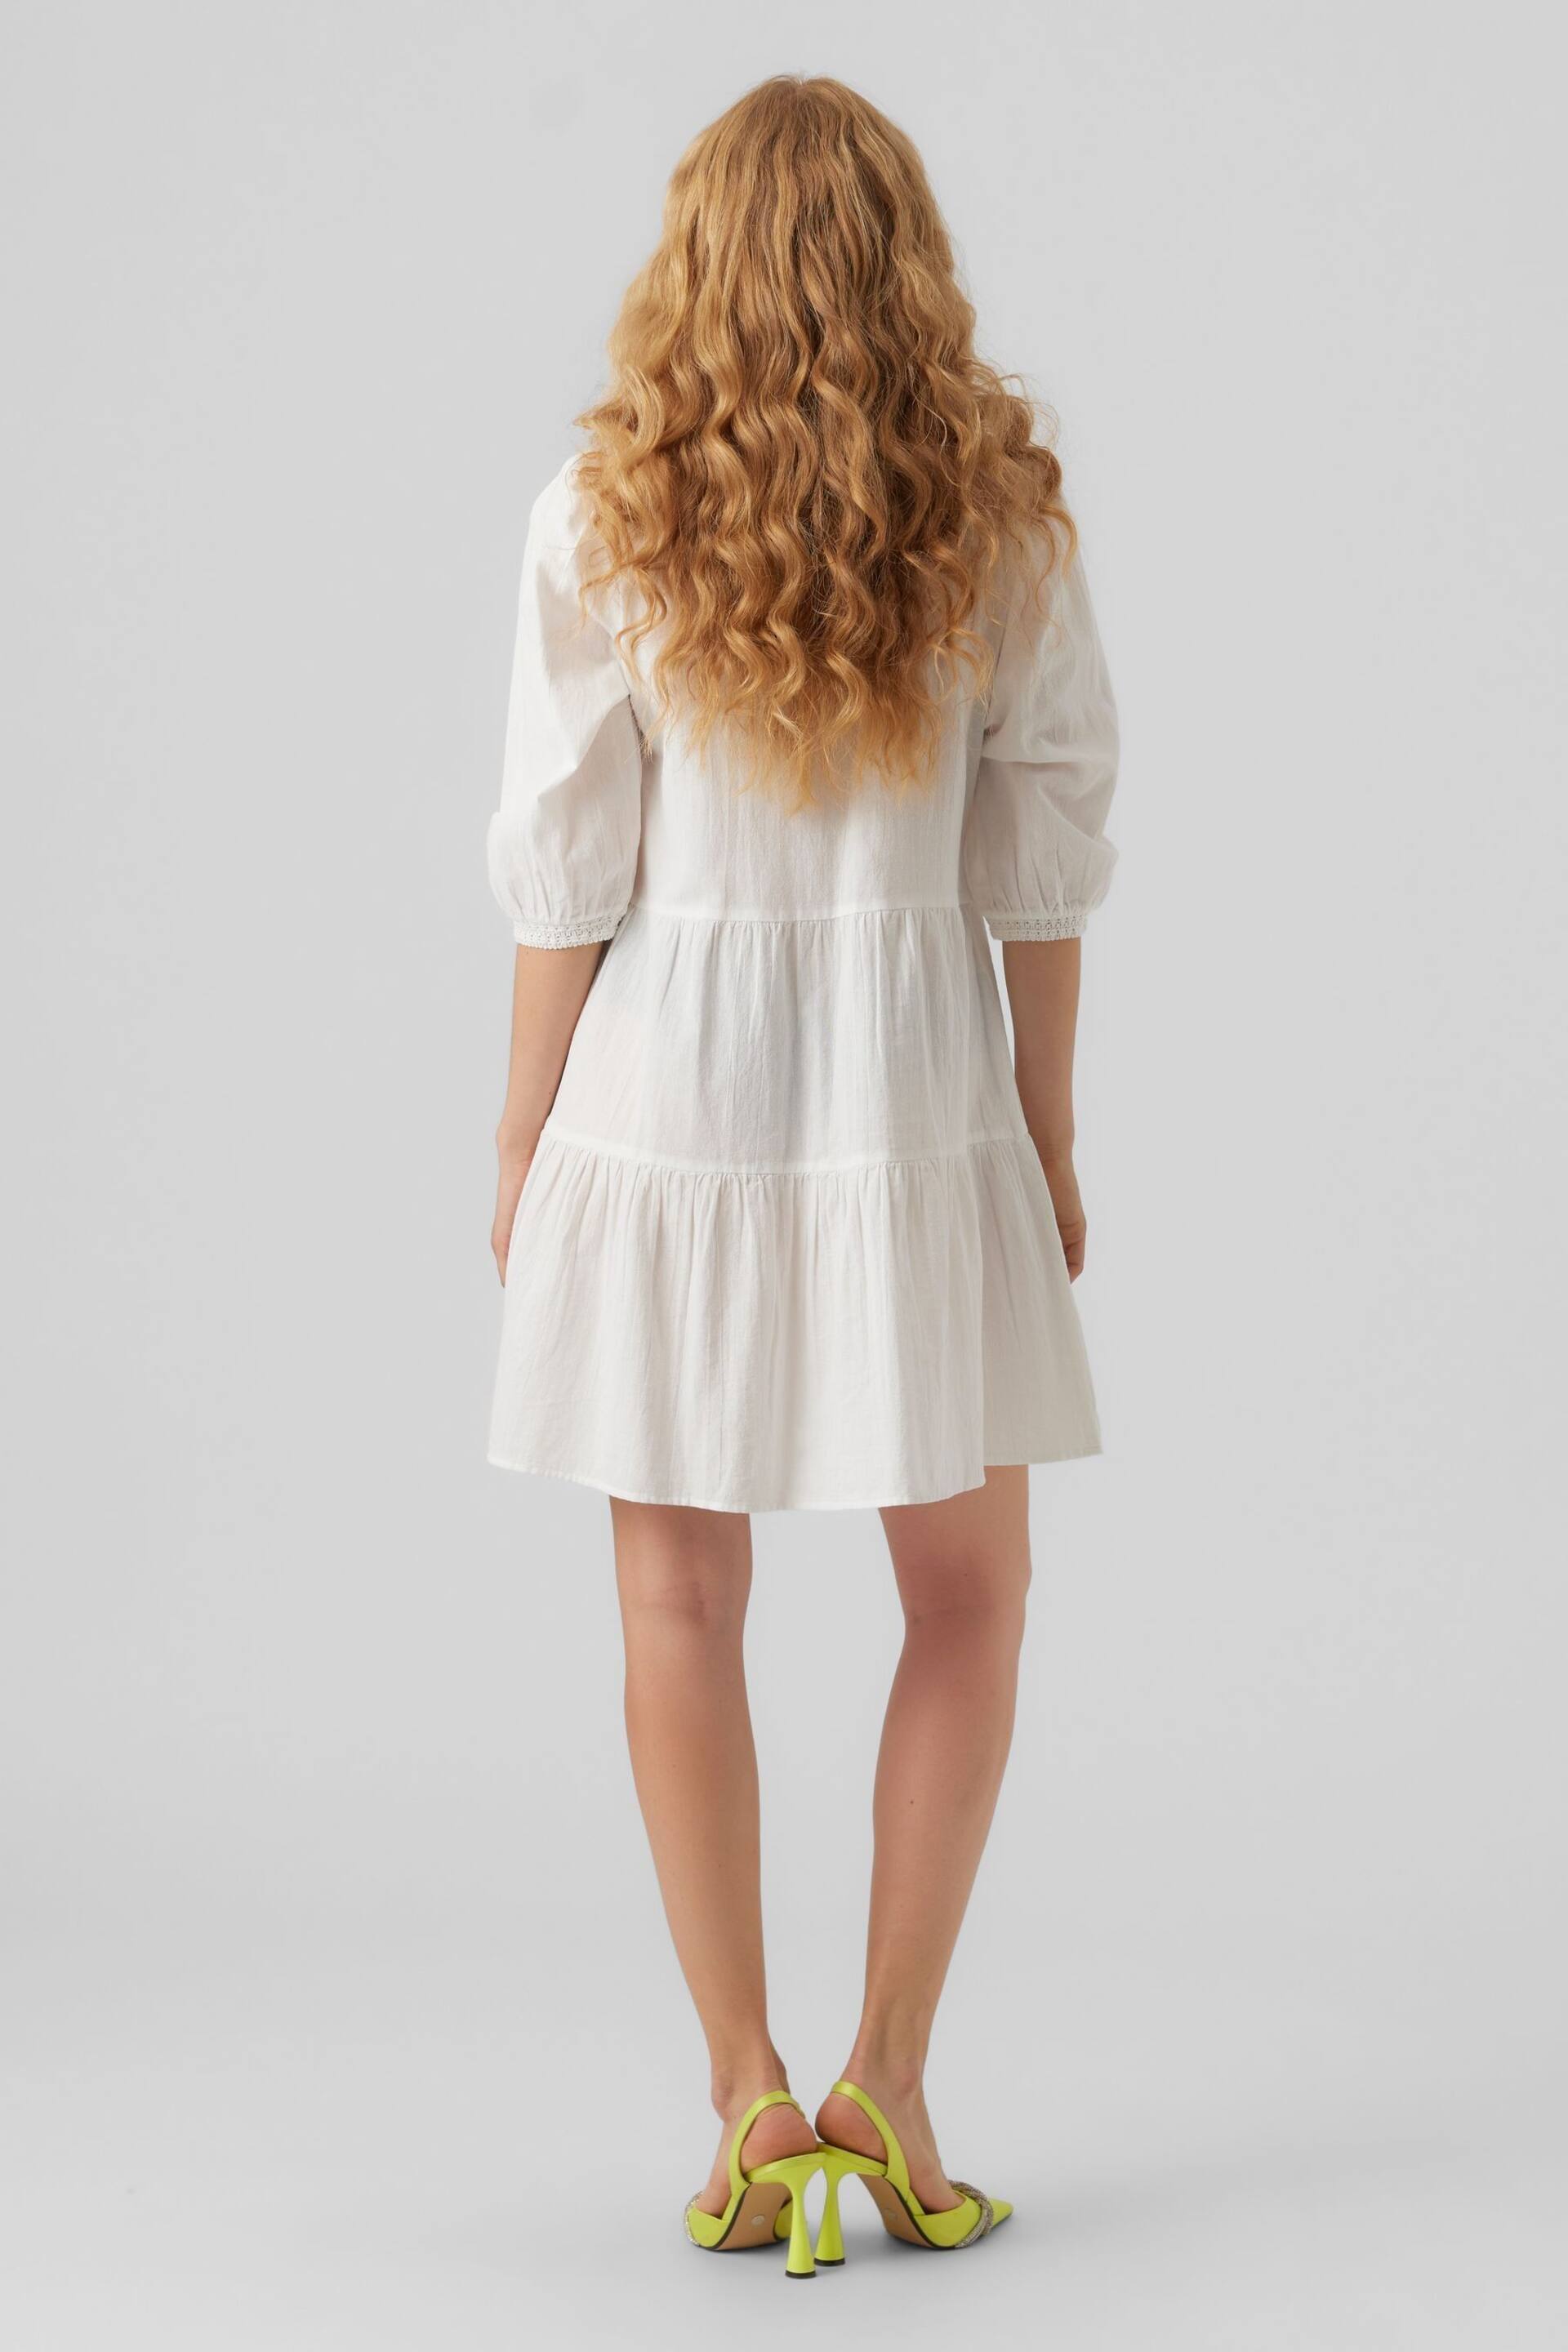 VERO MODA White Embroidered Detail Cotton Summer Boho Smock Dress - Image 2 of 5